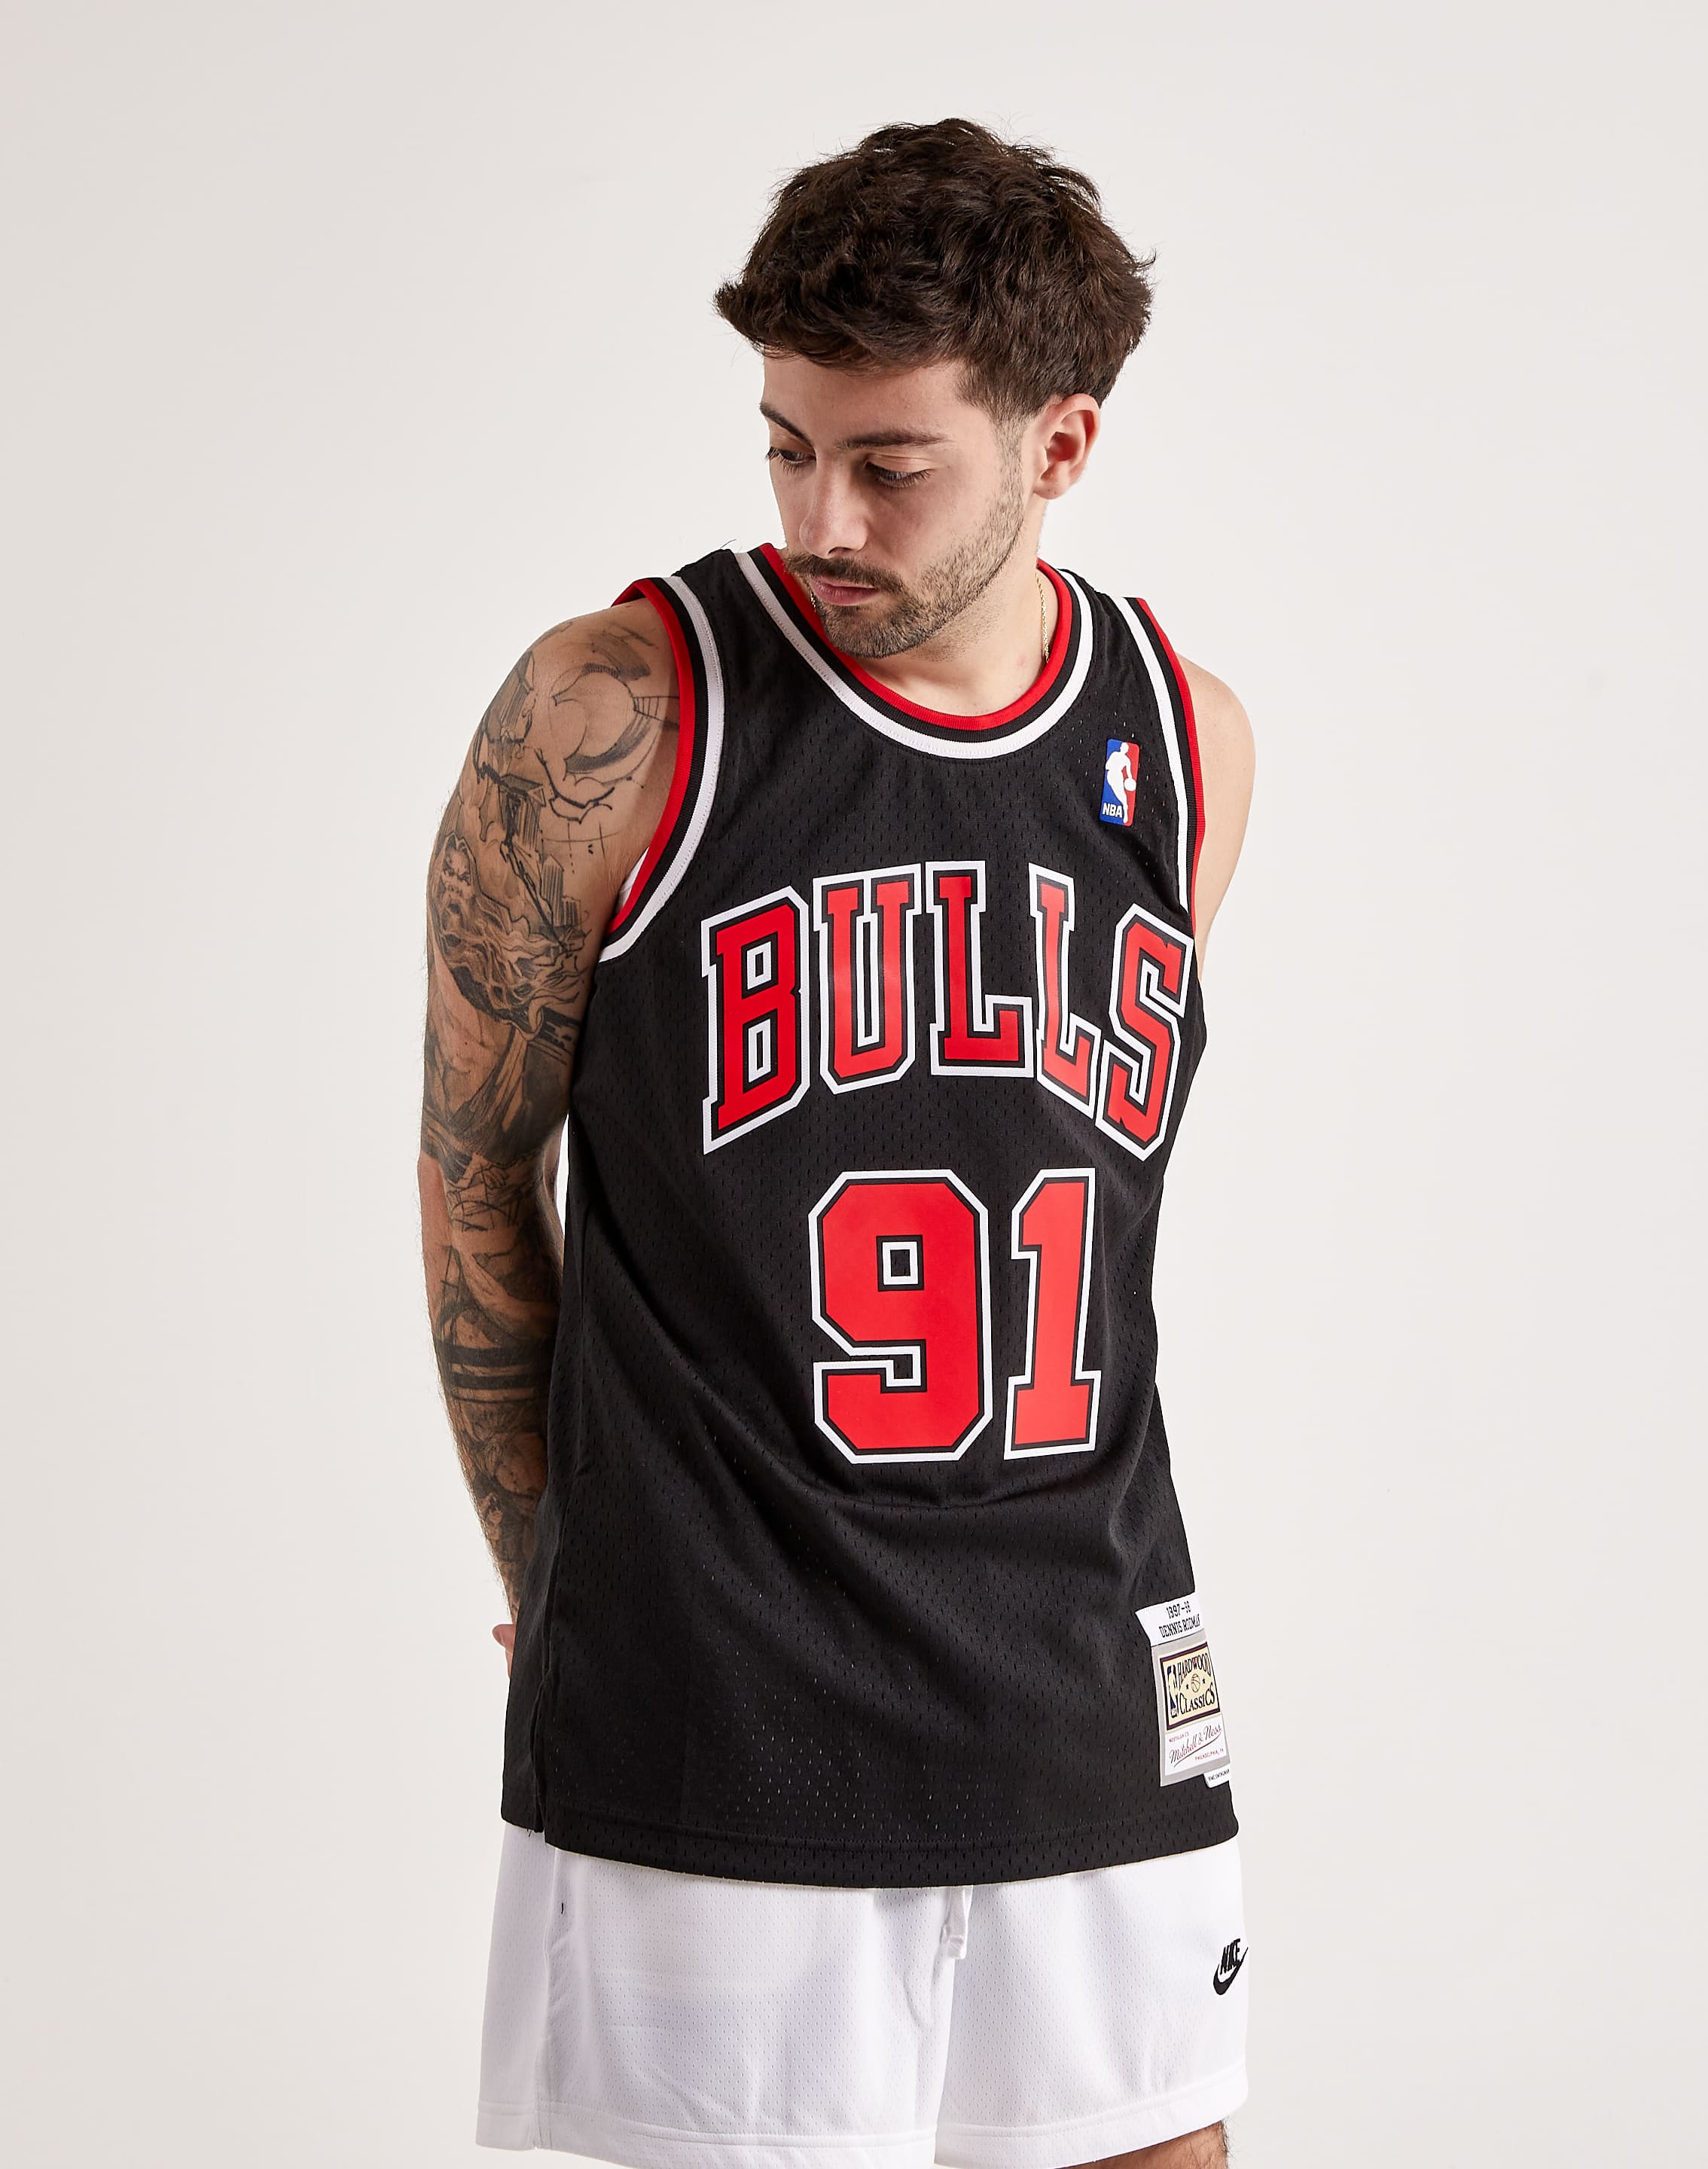 Chicago Bulls jerseys  Nba uniforms, Chicago bulls, Sports jersey design